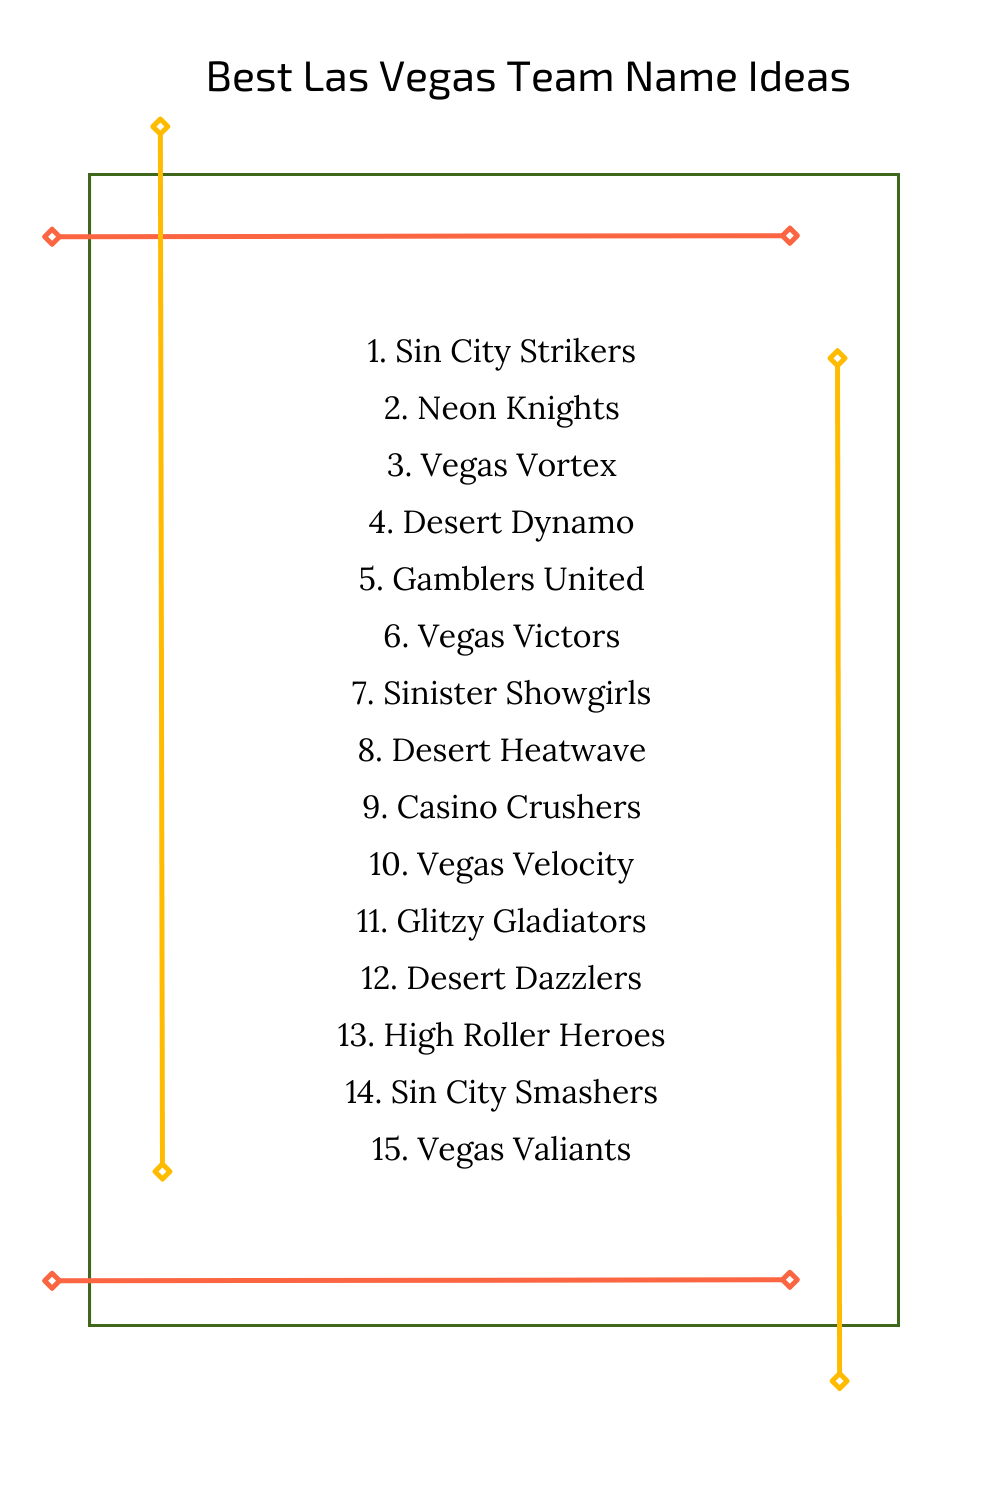 Best Las Vegas Team Name Ideas